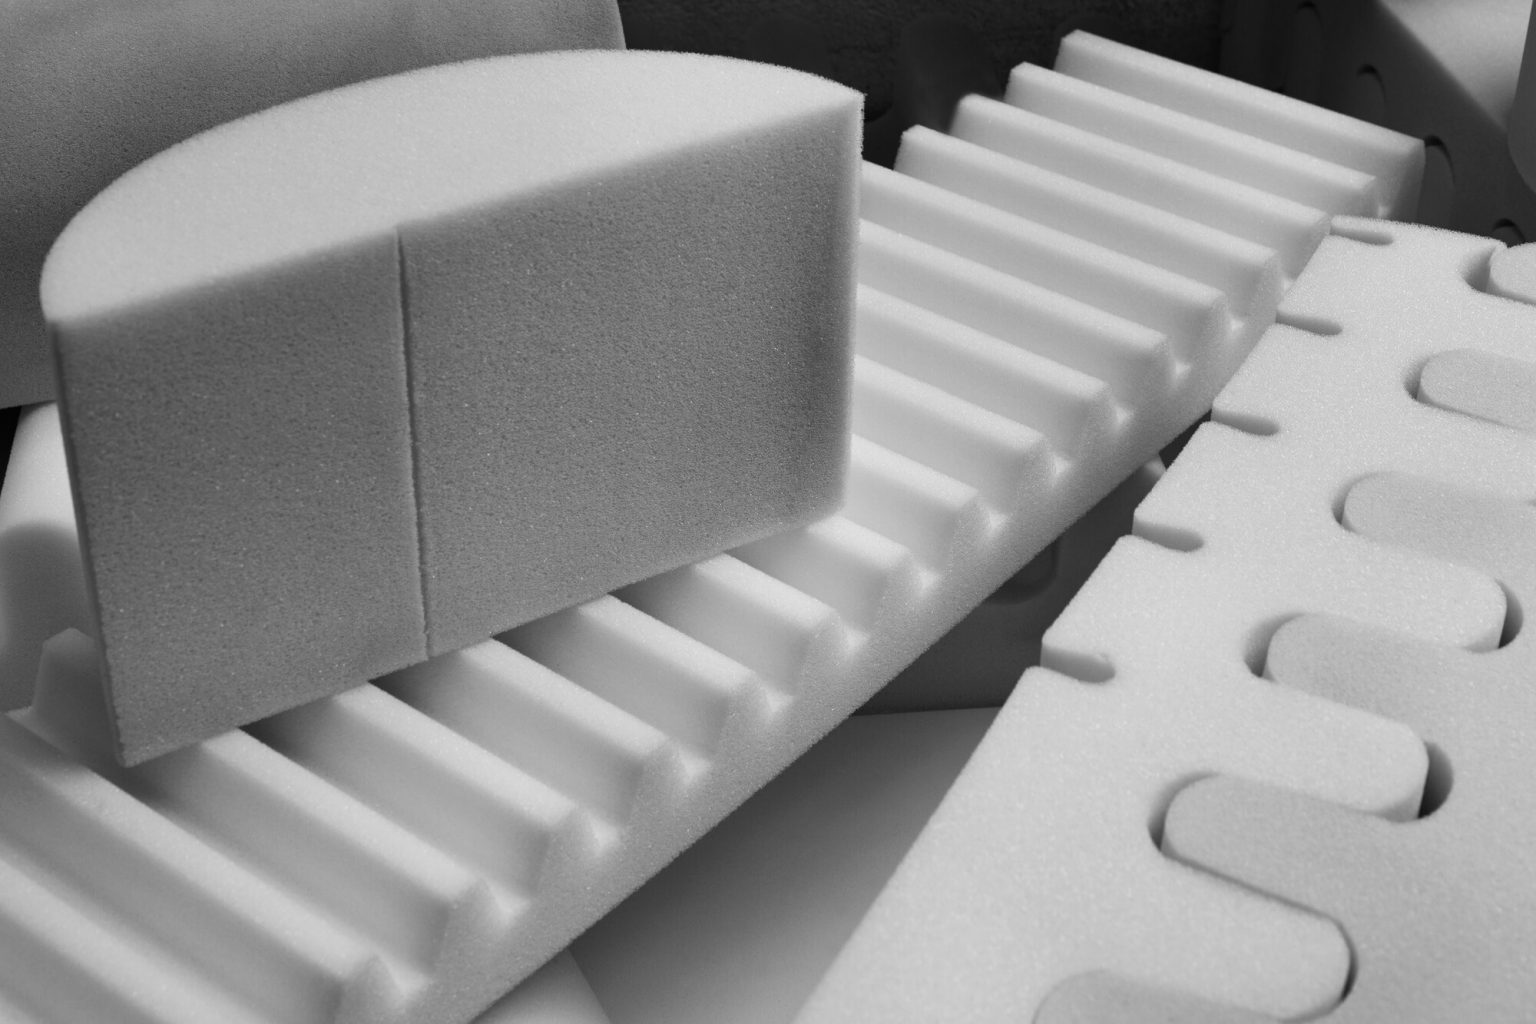 polyurethane foam mattress review